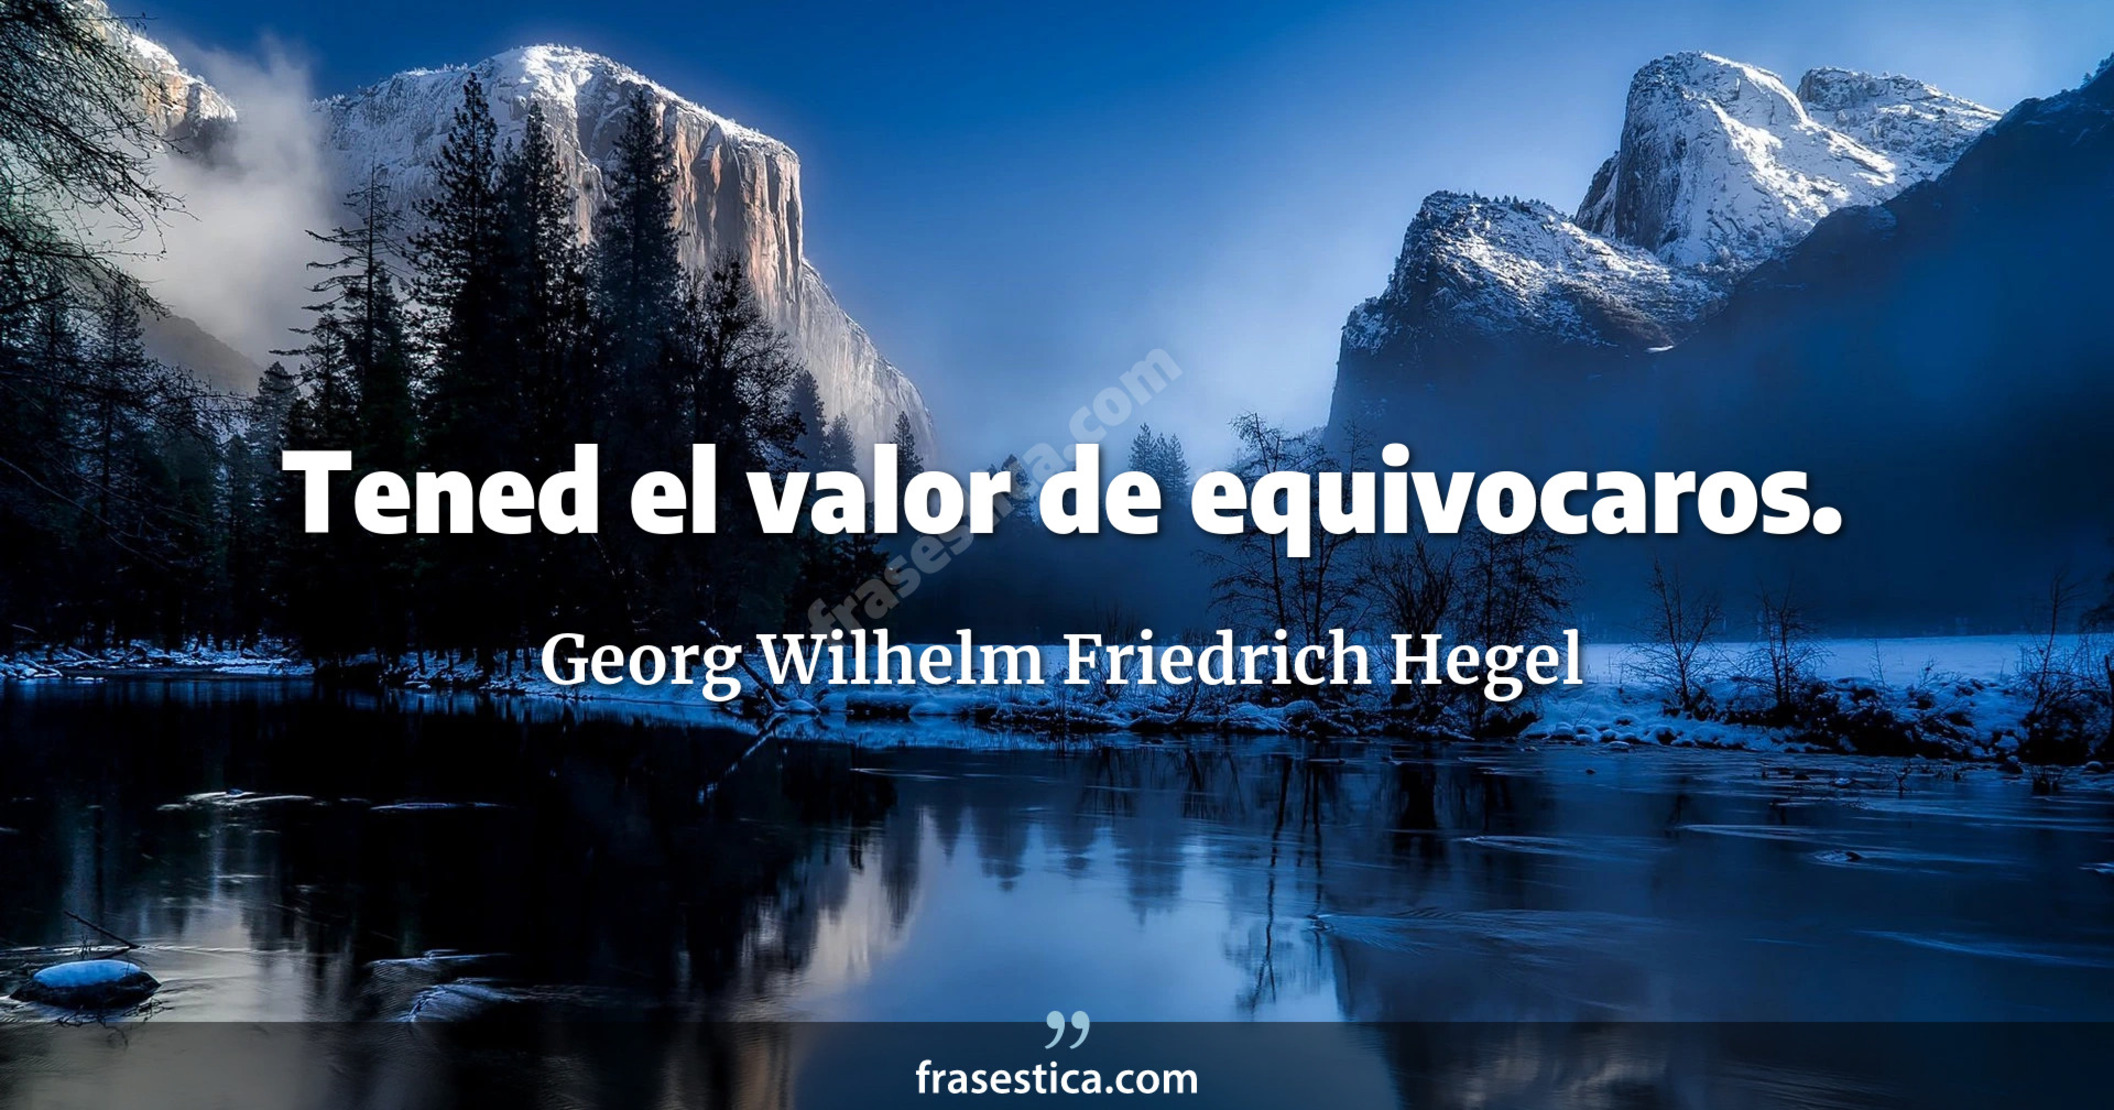 Tened el valor de equivocaros. - Georg Wilhelm Friedrich Hegel